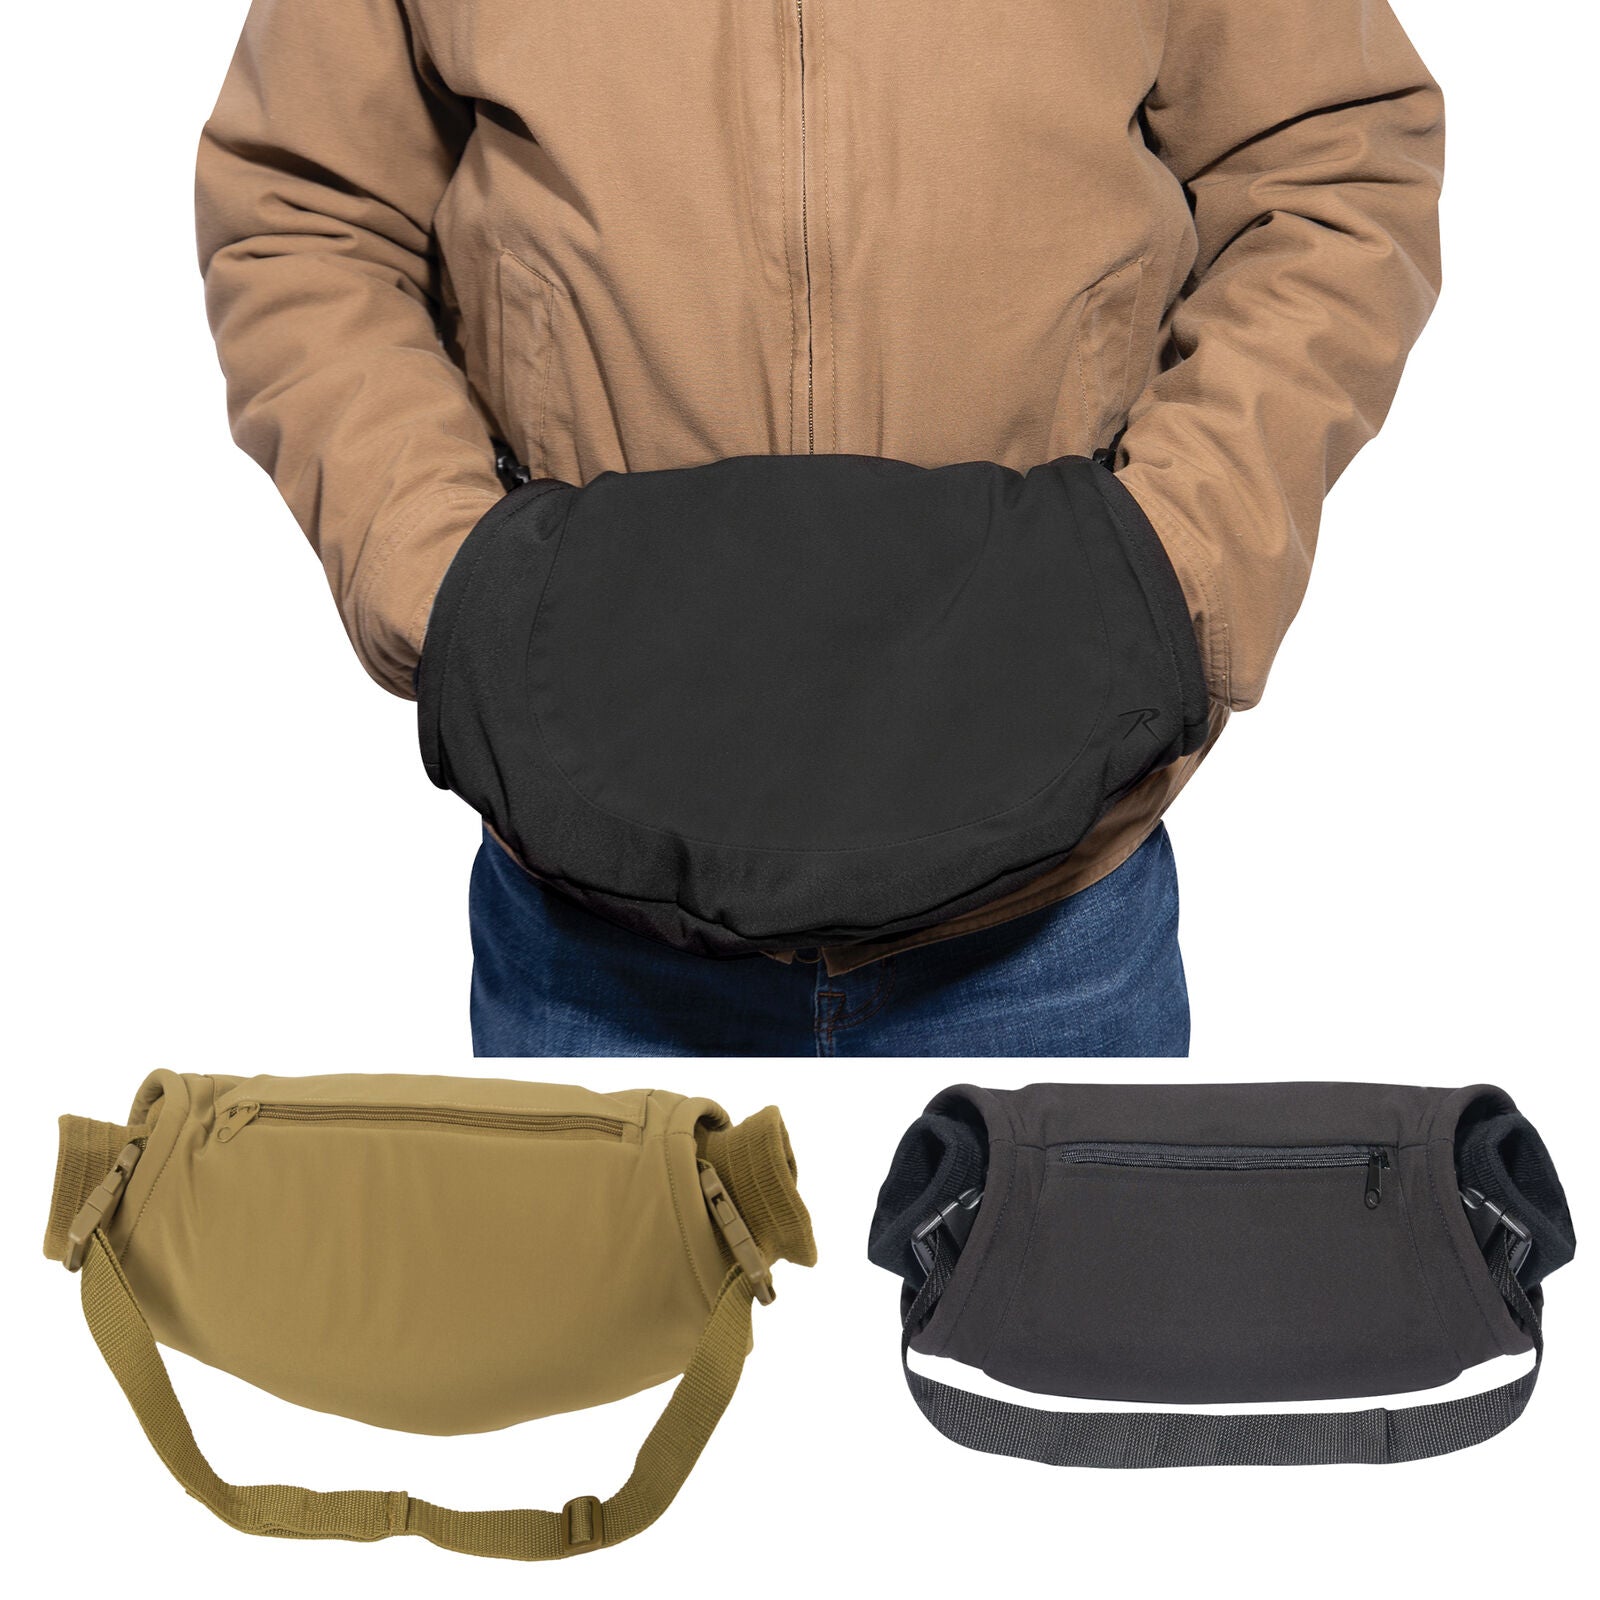 Rothco Soft Lined Warmer Deuce – Trading Shell Hand Adjust Muffler Fleece Ma Utility Post with